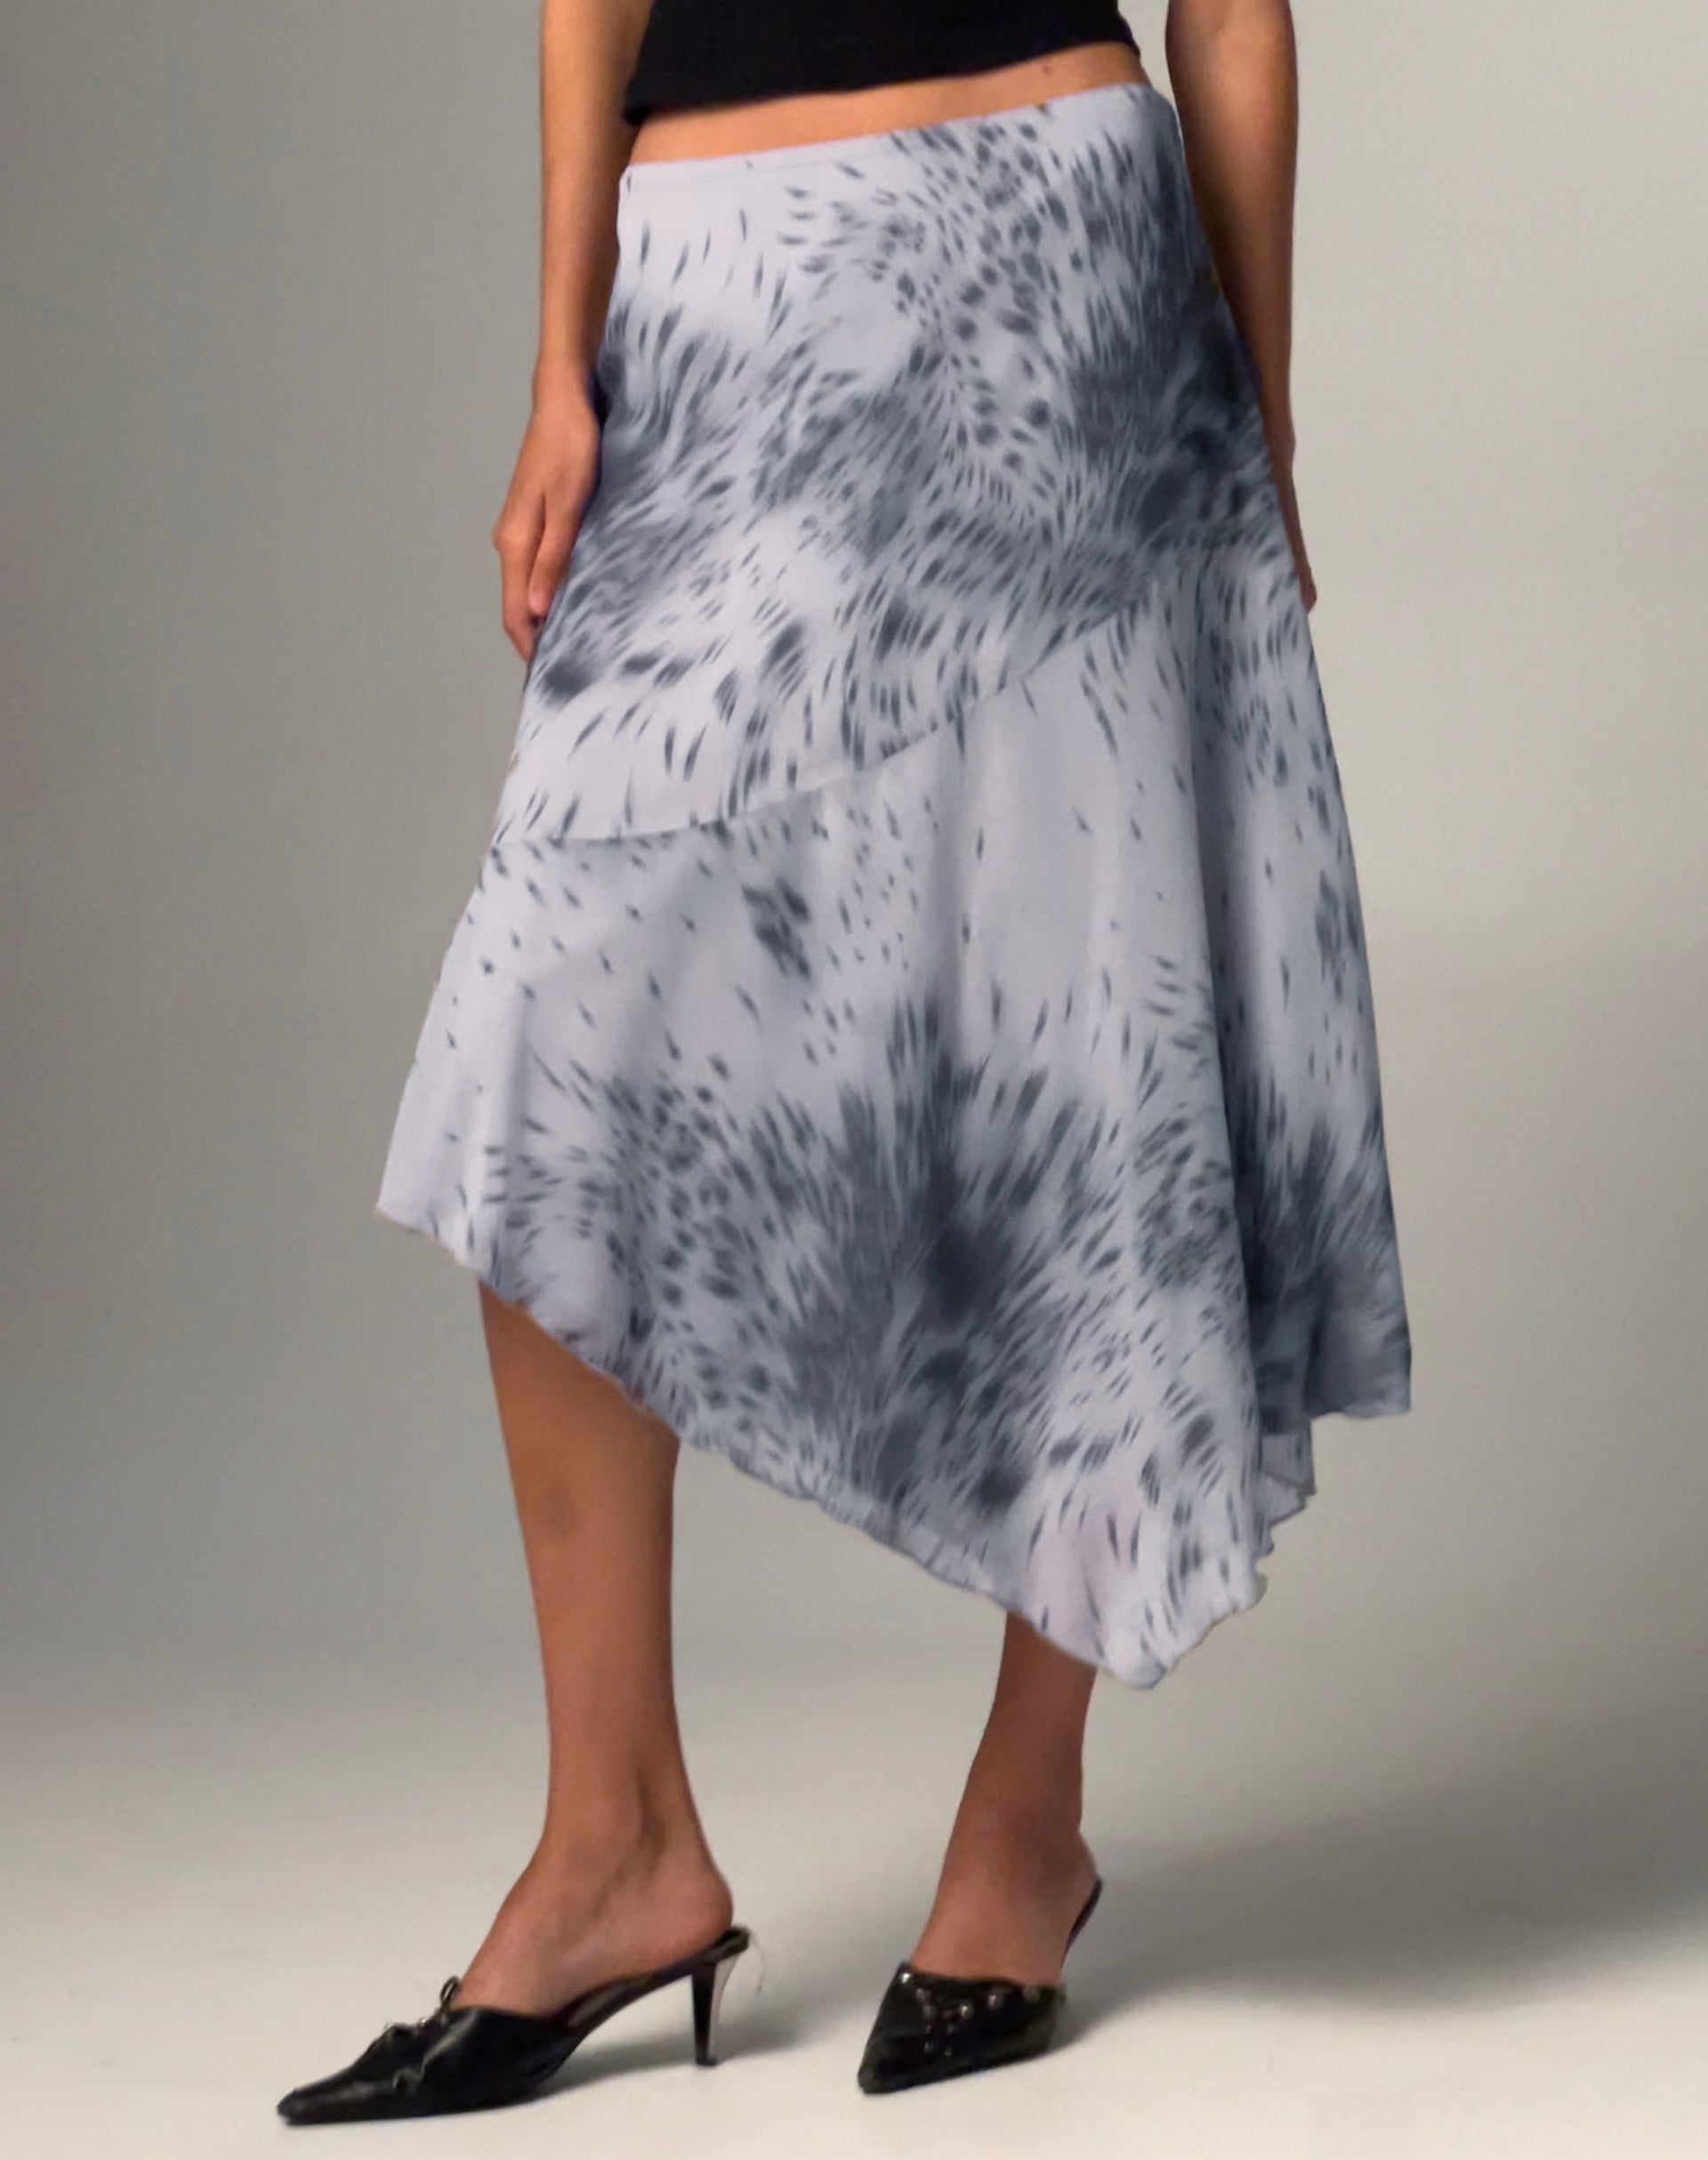 Image of Cinta Low Rise Midi Skirt in Distorted Animal Print